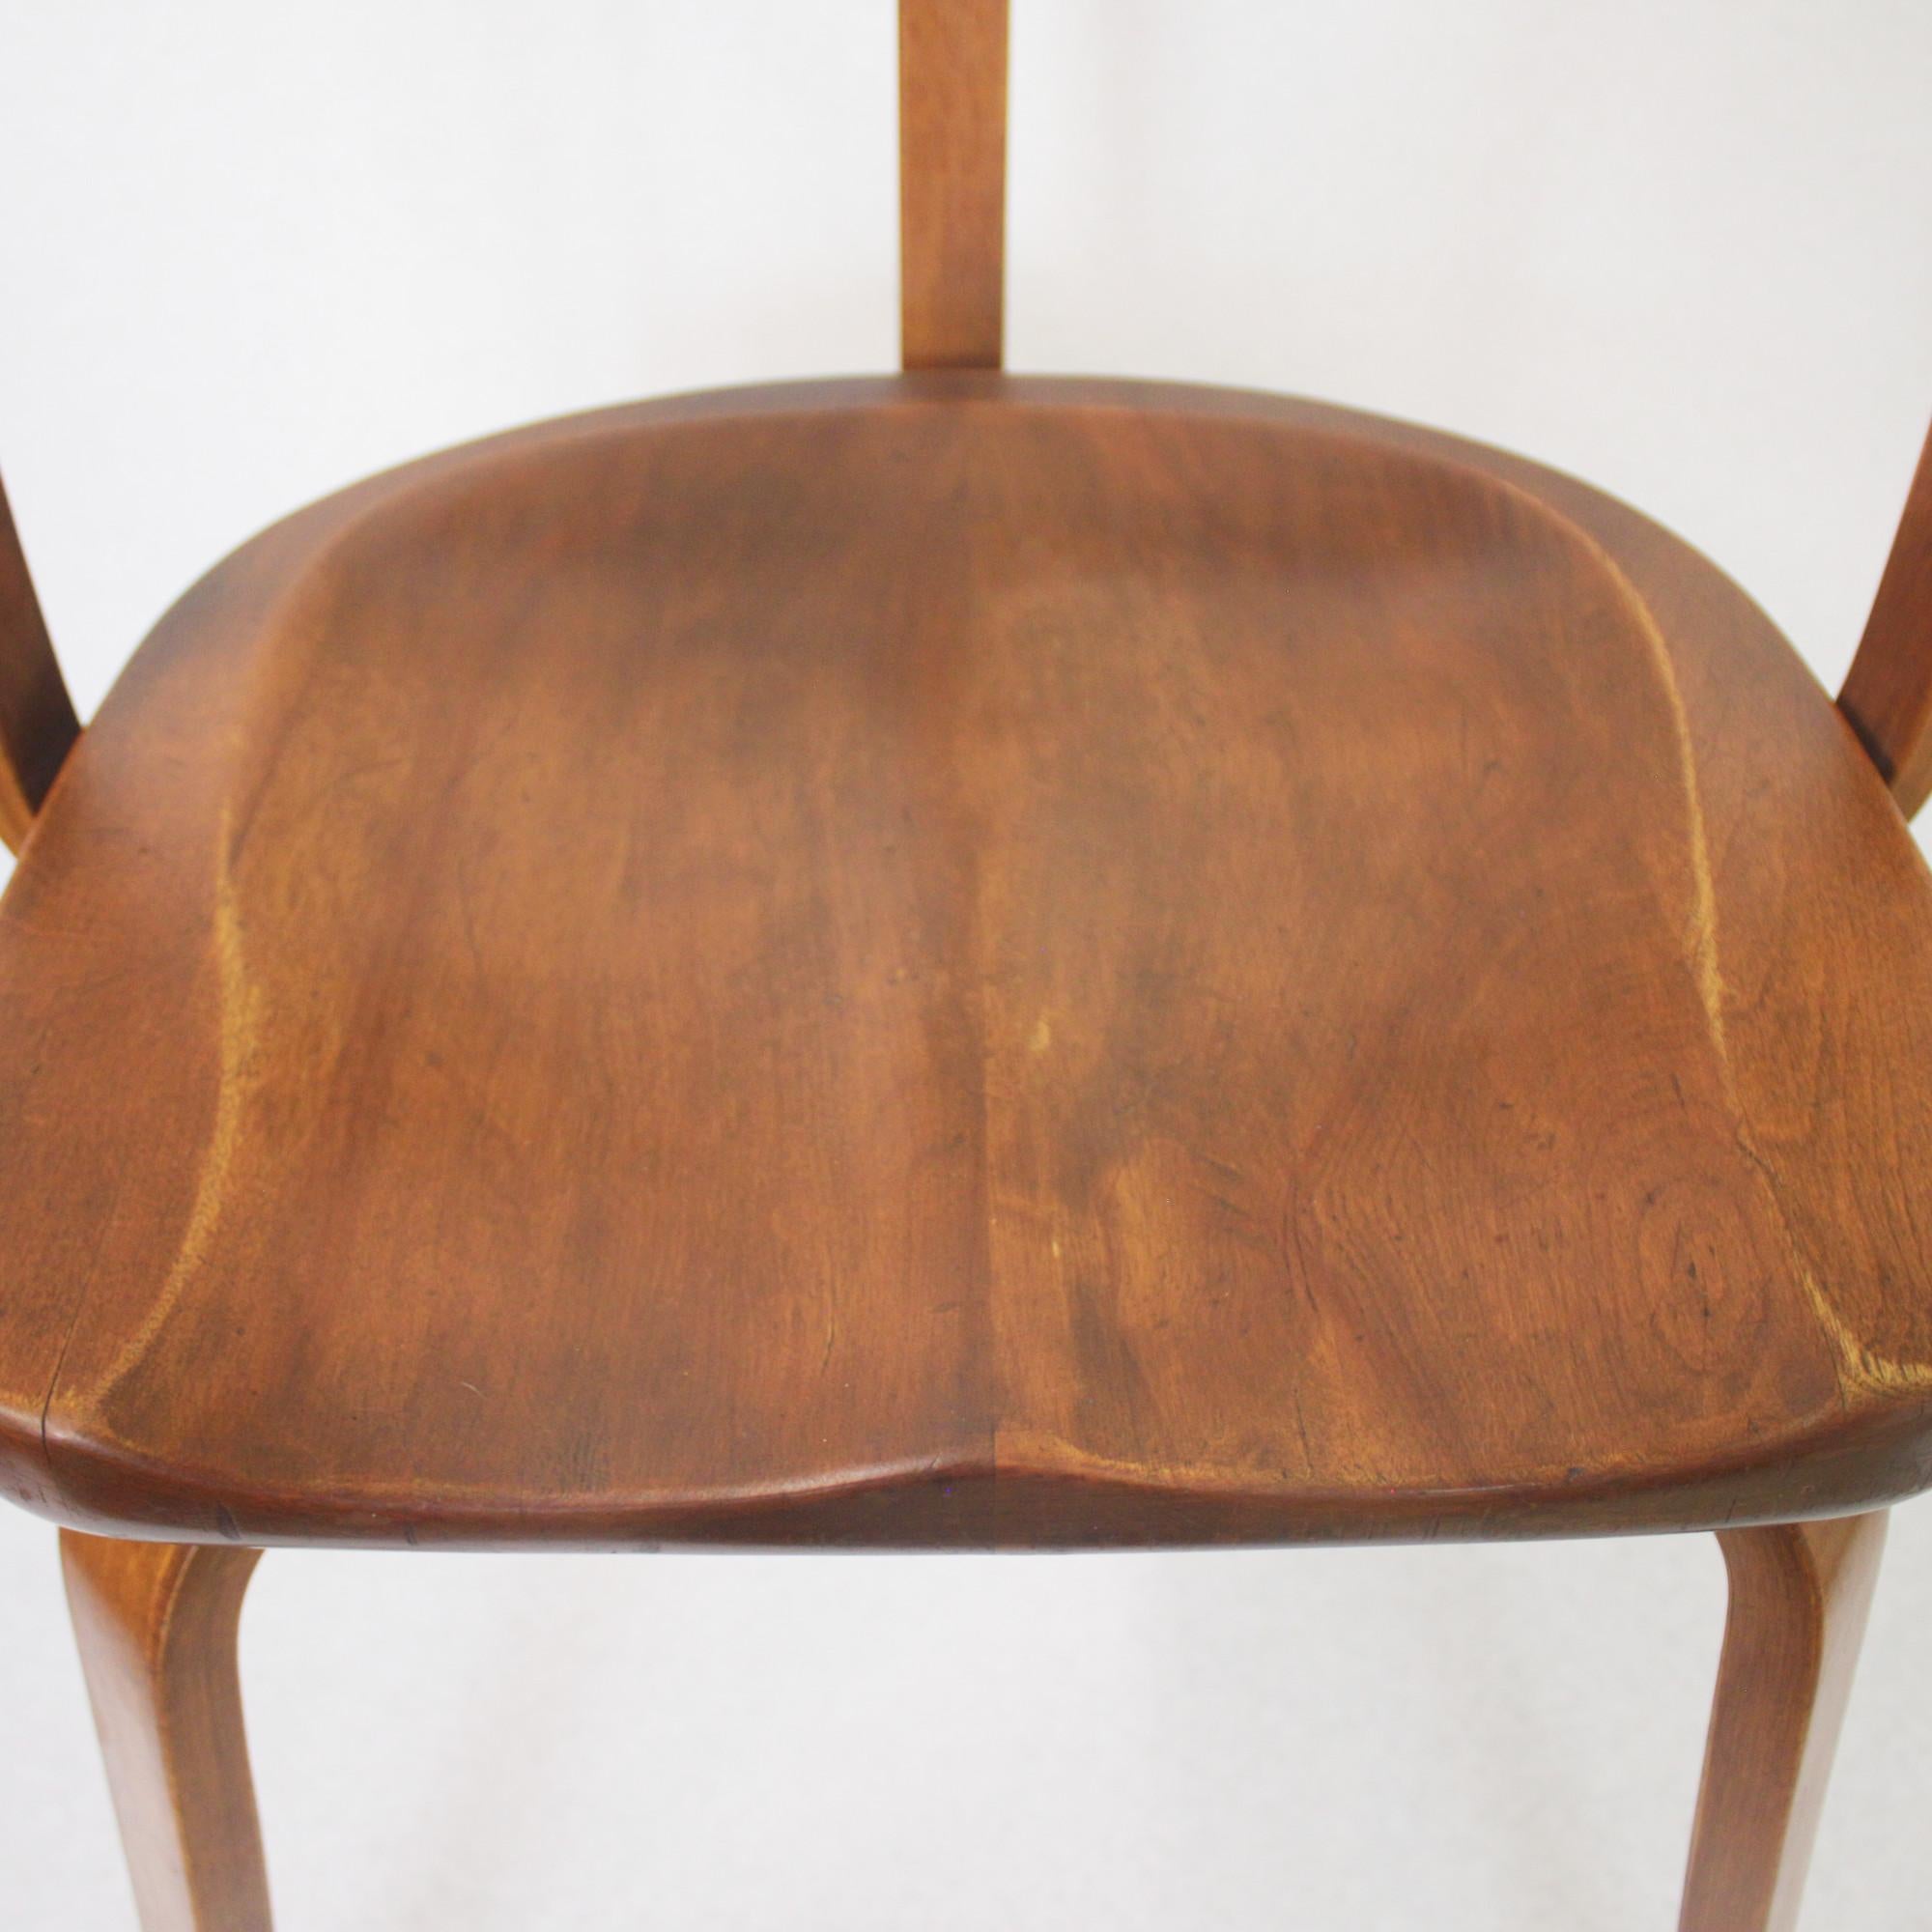 Mid-20th Century Rare Mid-Century Modern W199 Chair Designed by Walter Gropius for Thonet Bauhaus